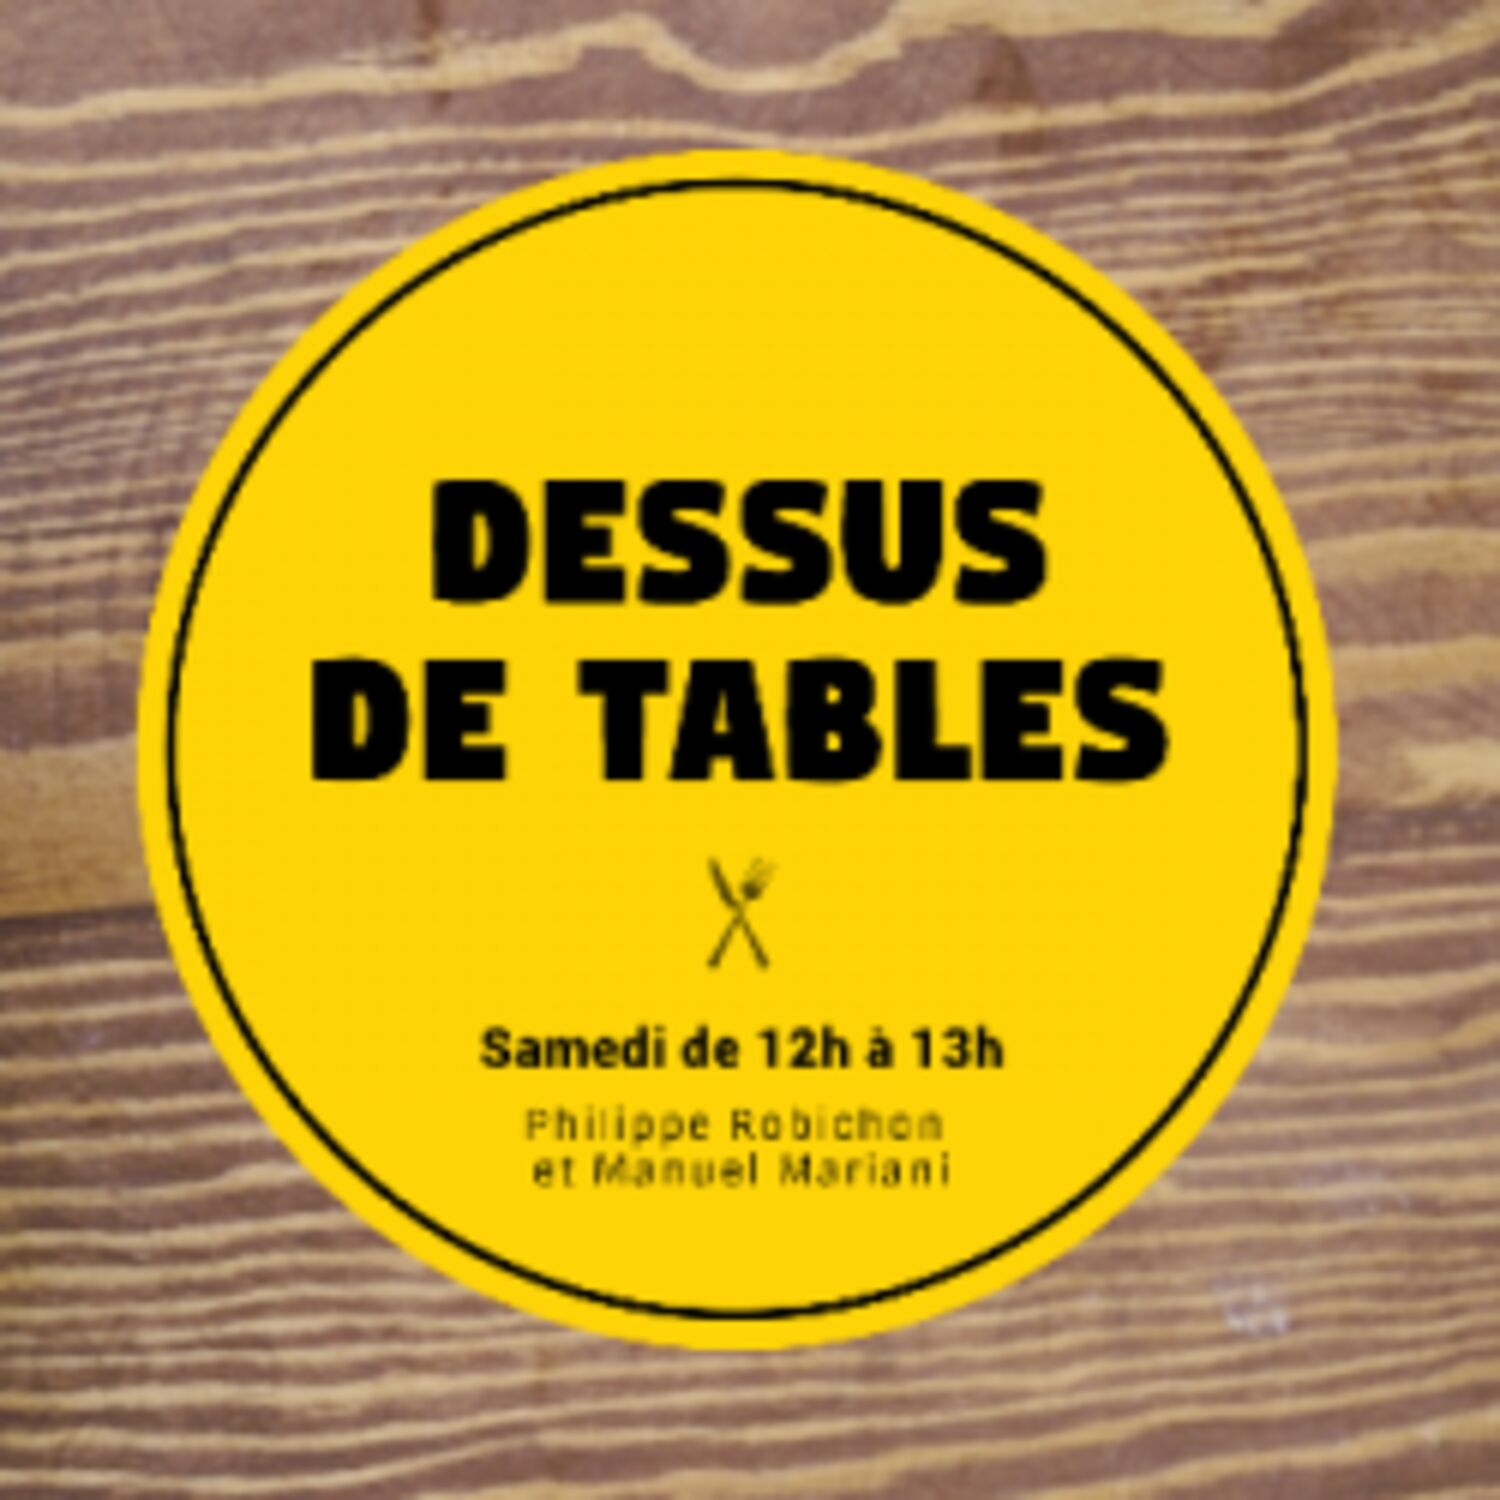 Dessus de tables 26-06-2021